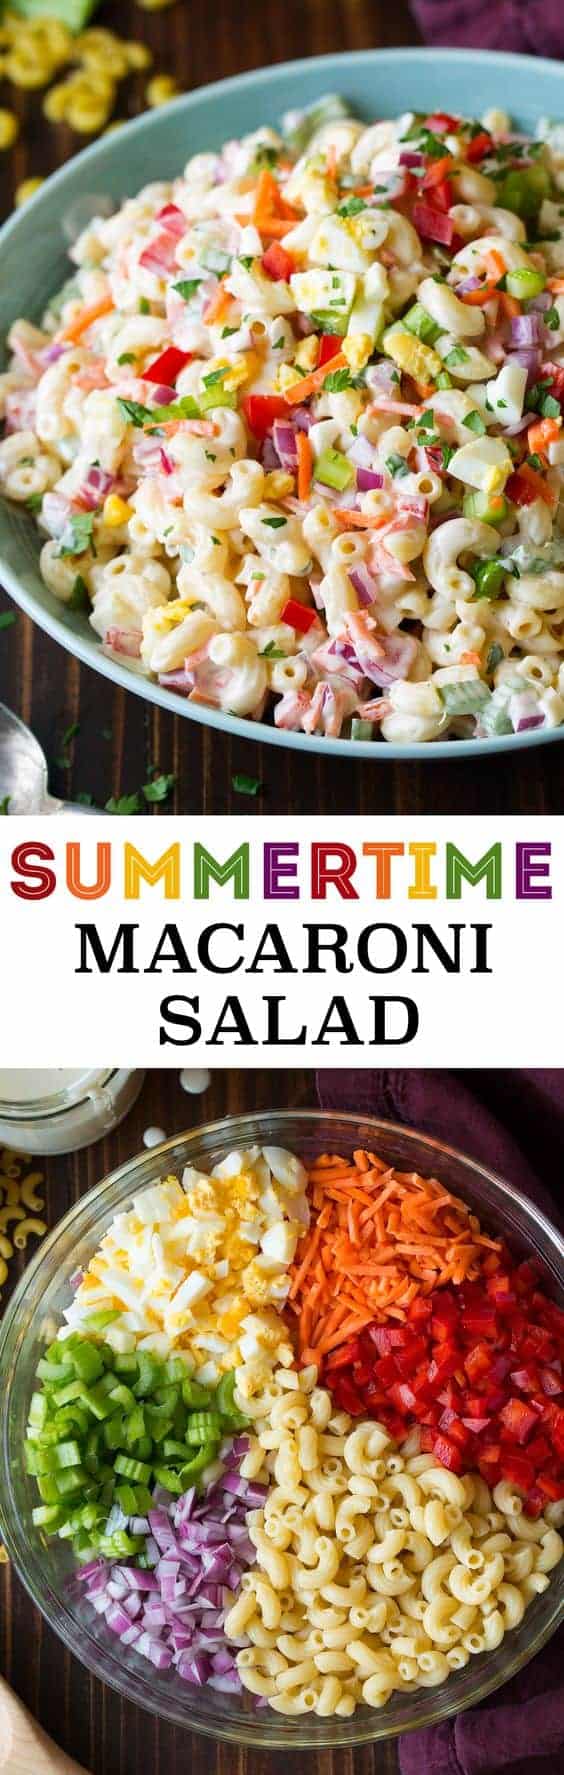 Summertime Pasta Macaroni Salad by Cooking Classy | Delicious Summertime Pasta Salad Recipes! 